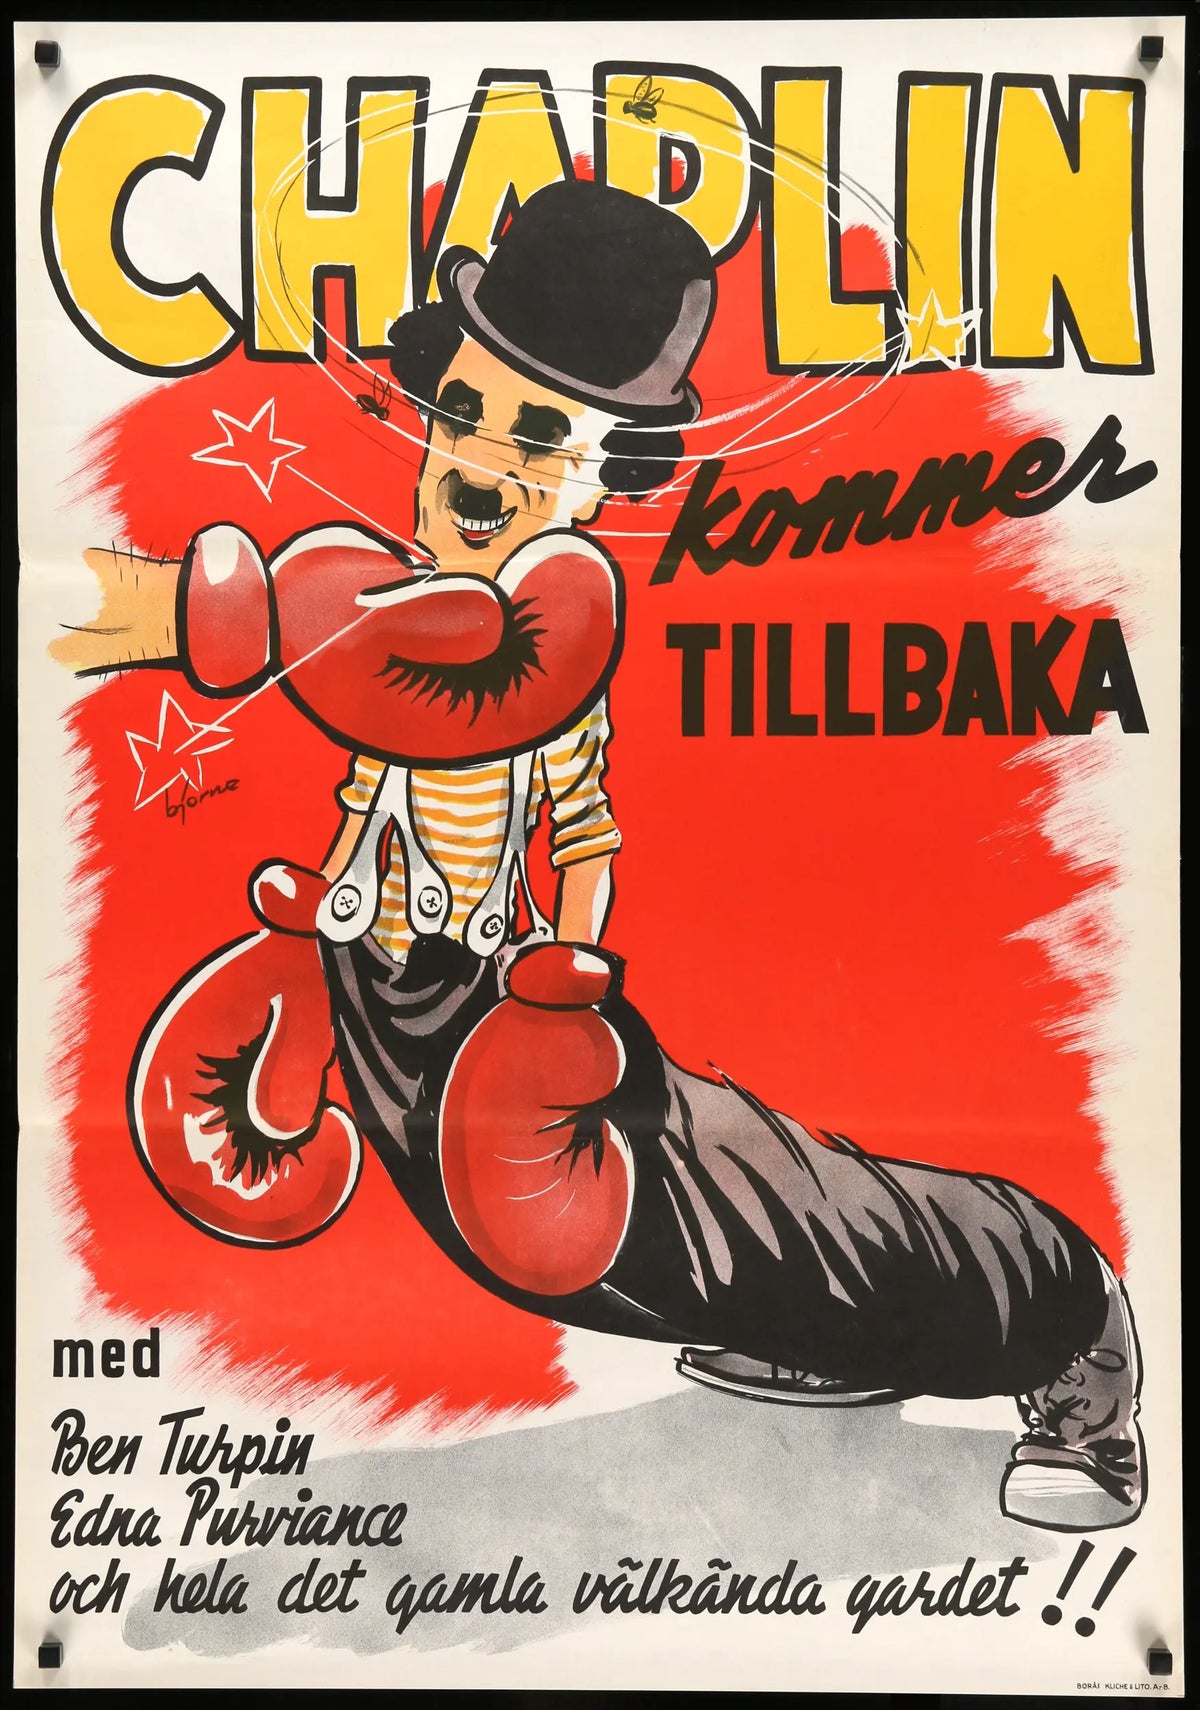 Champion (1915) original movie poster for sale at Original Film Art